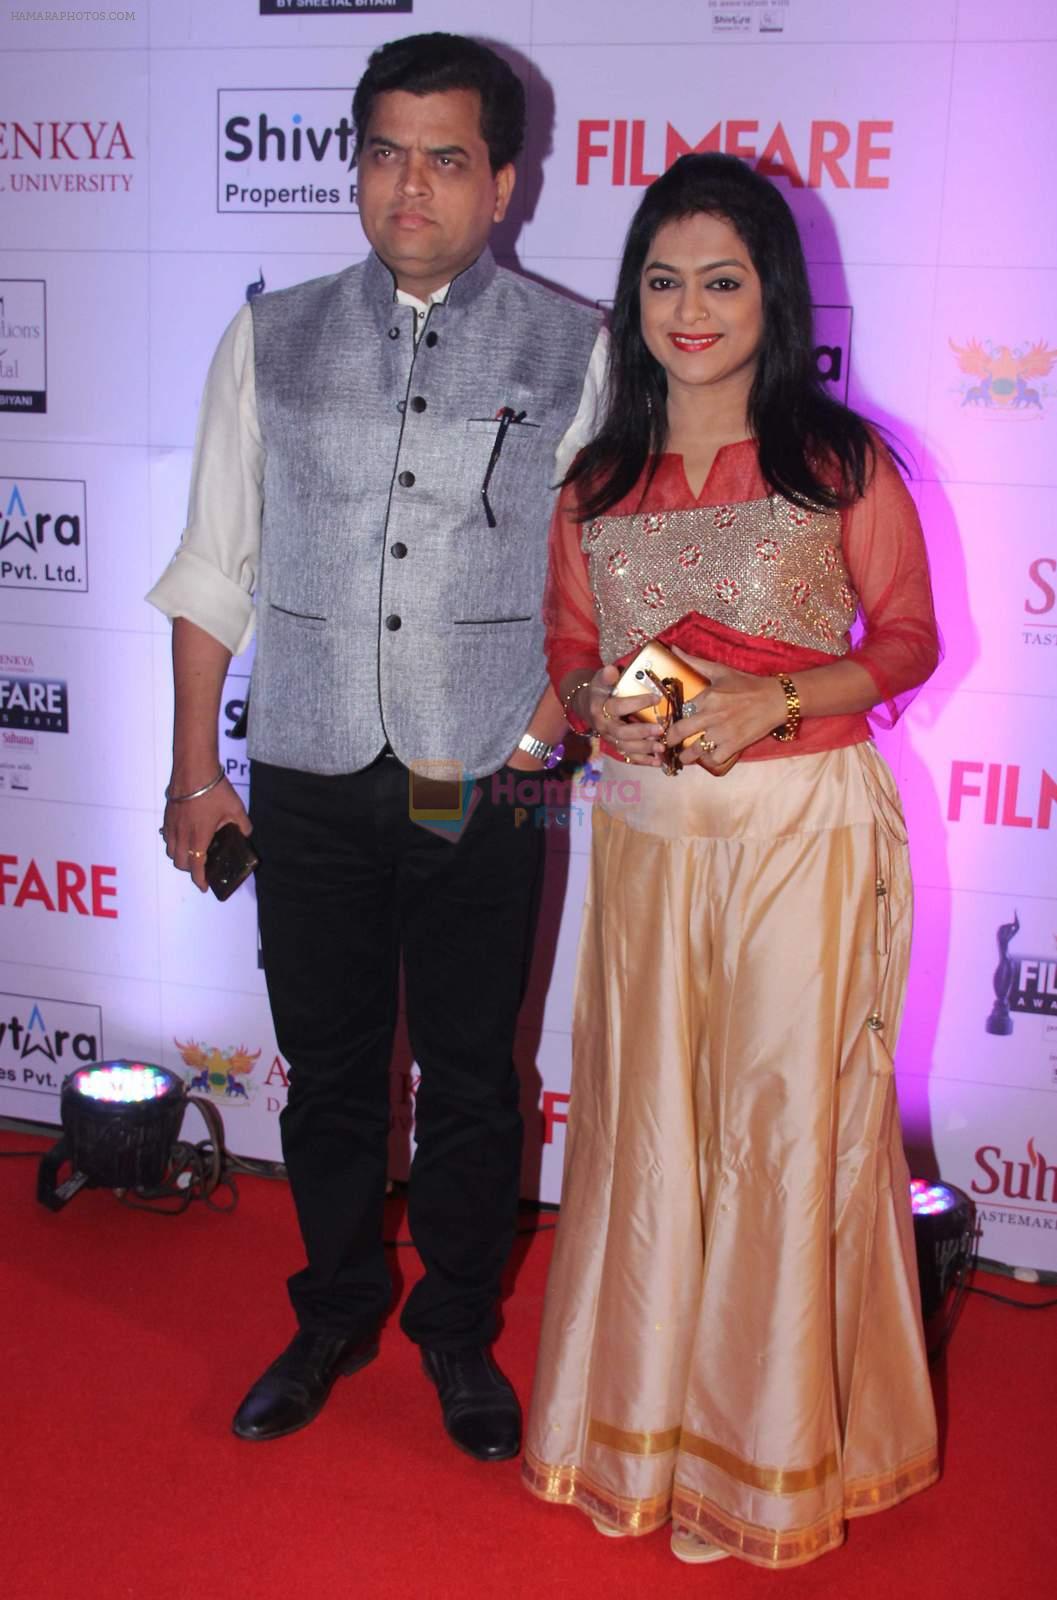 Sharad Ponkshe at the Red Carpet of _Ajeenkya DY Patil University Filmfare Awards